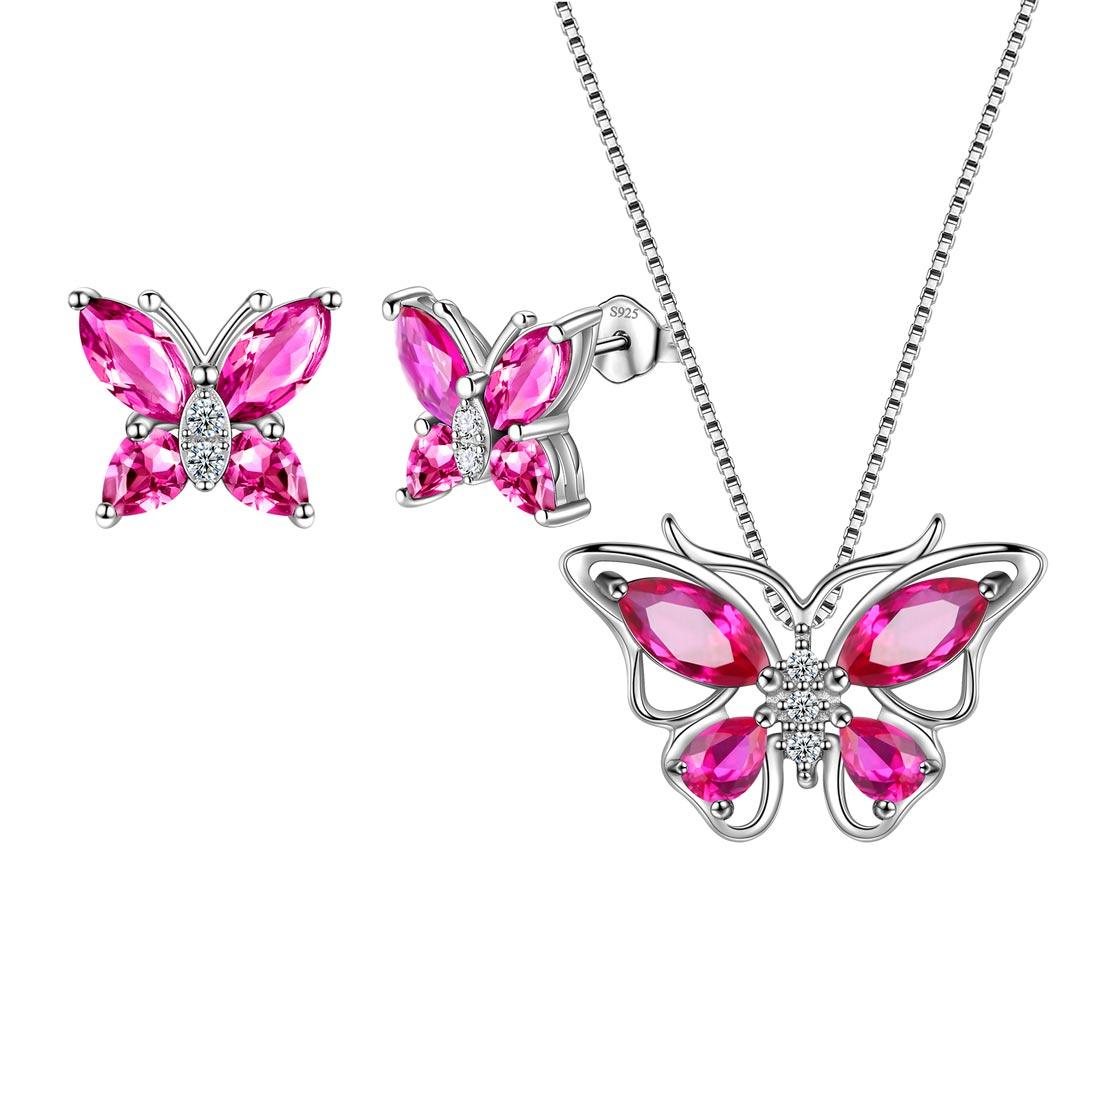 Butterfly Jewelry Set Birthstone July Ruby - Jewelry Set - Aurora Tears